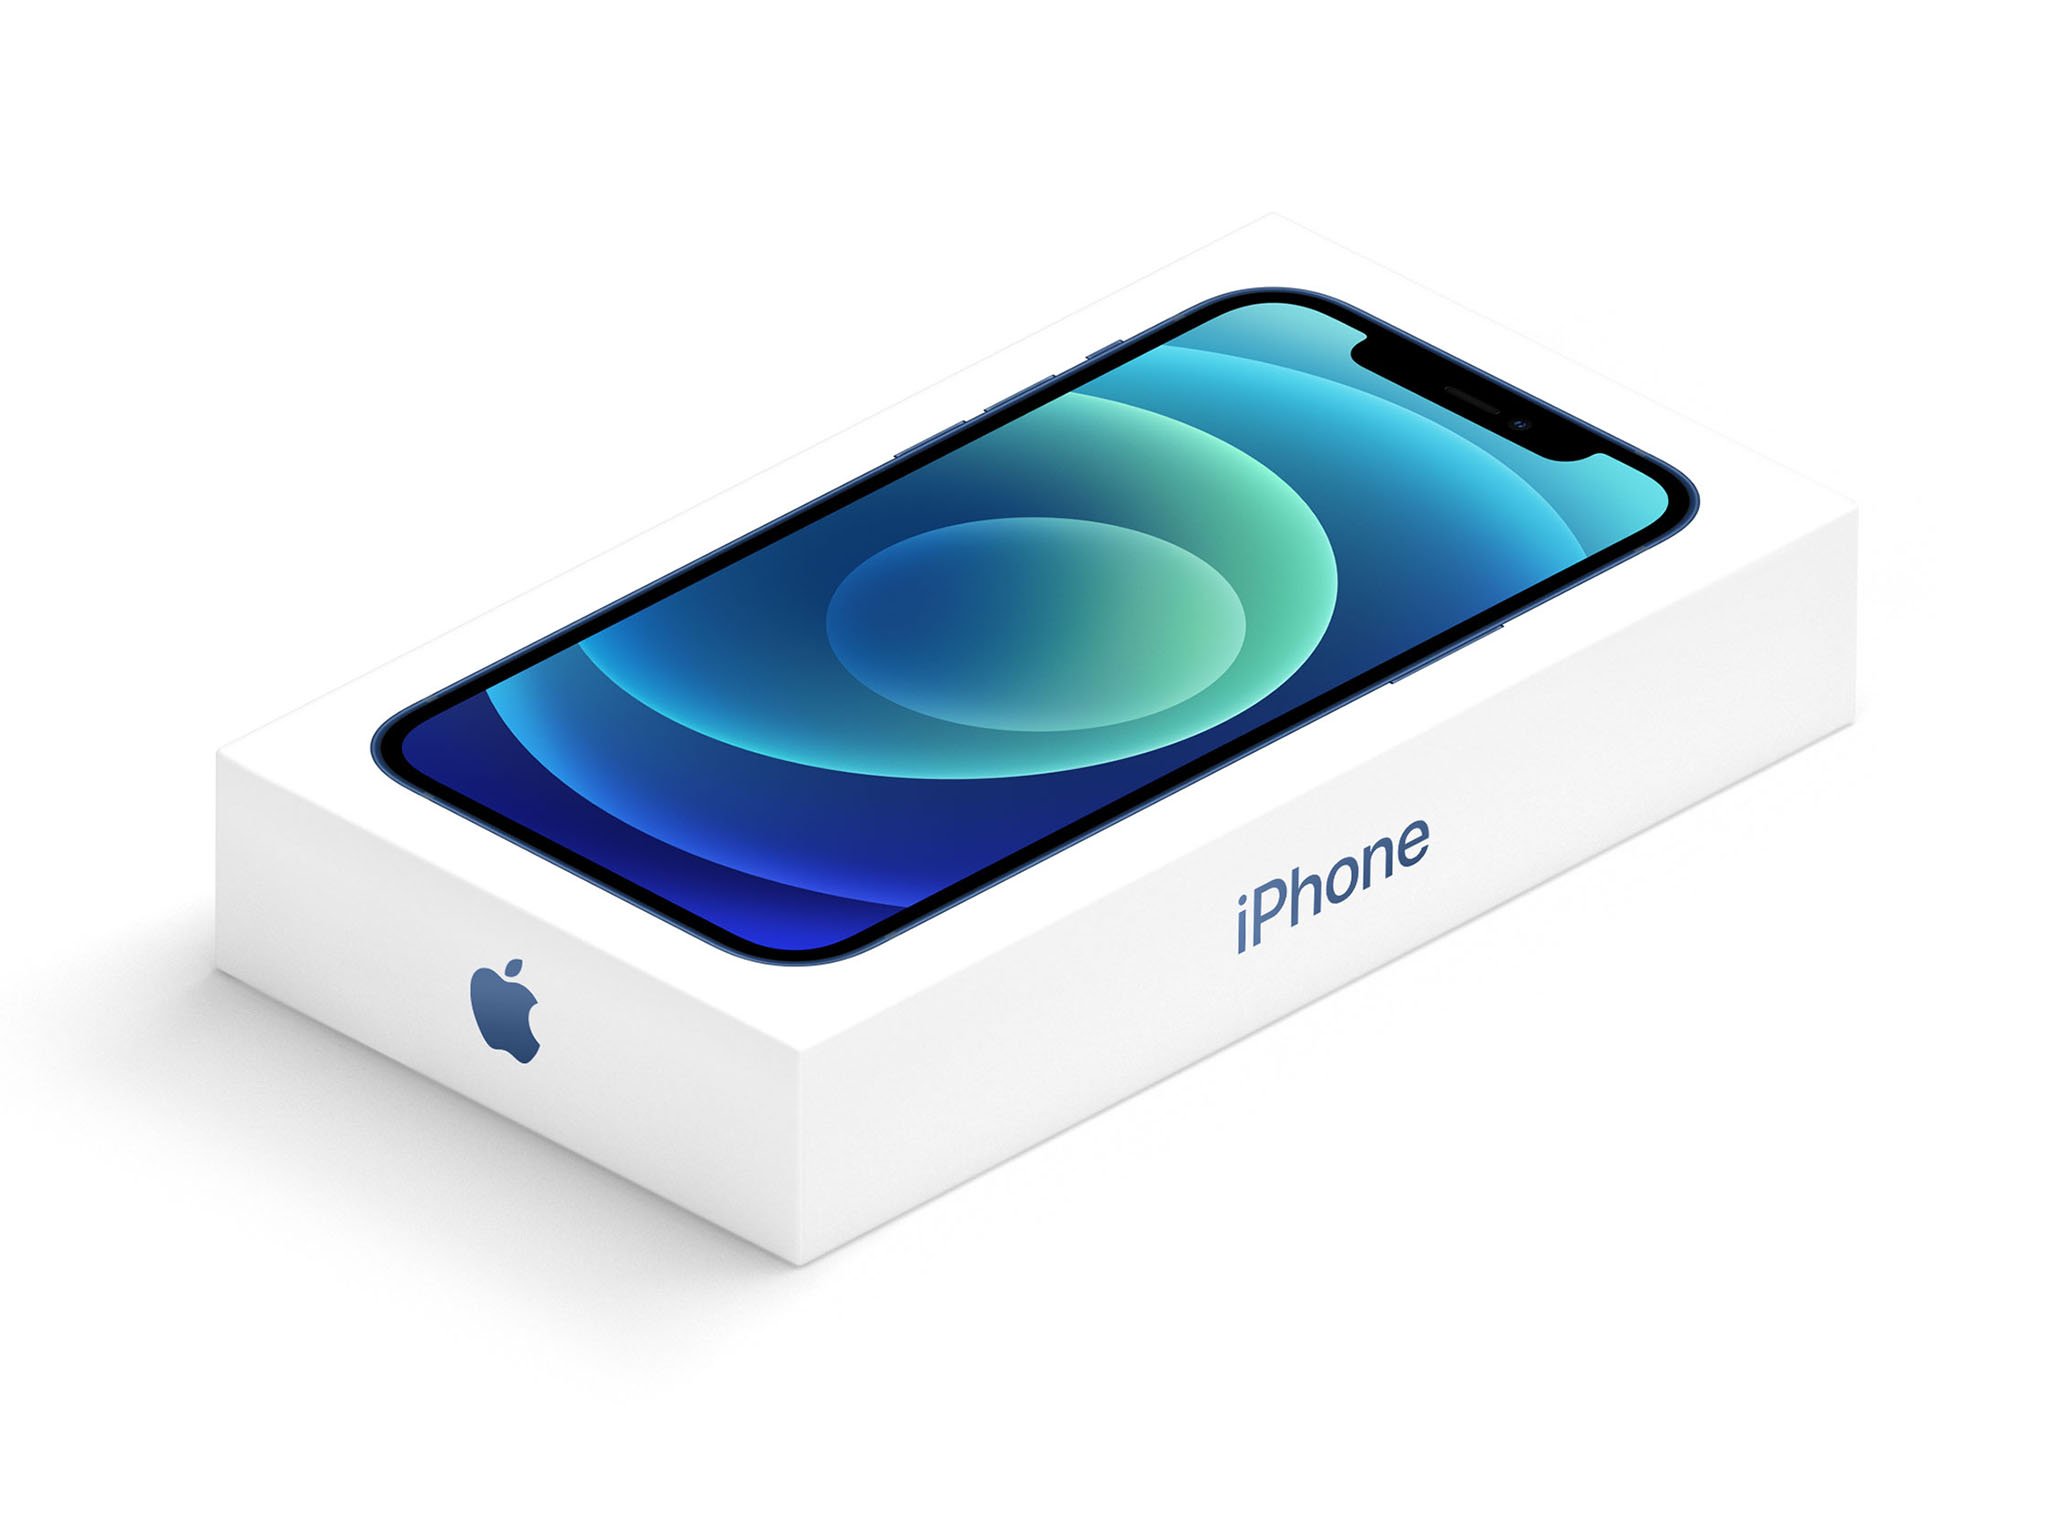 Apple iPhone 12 box